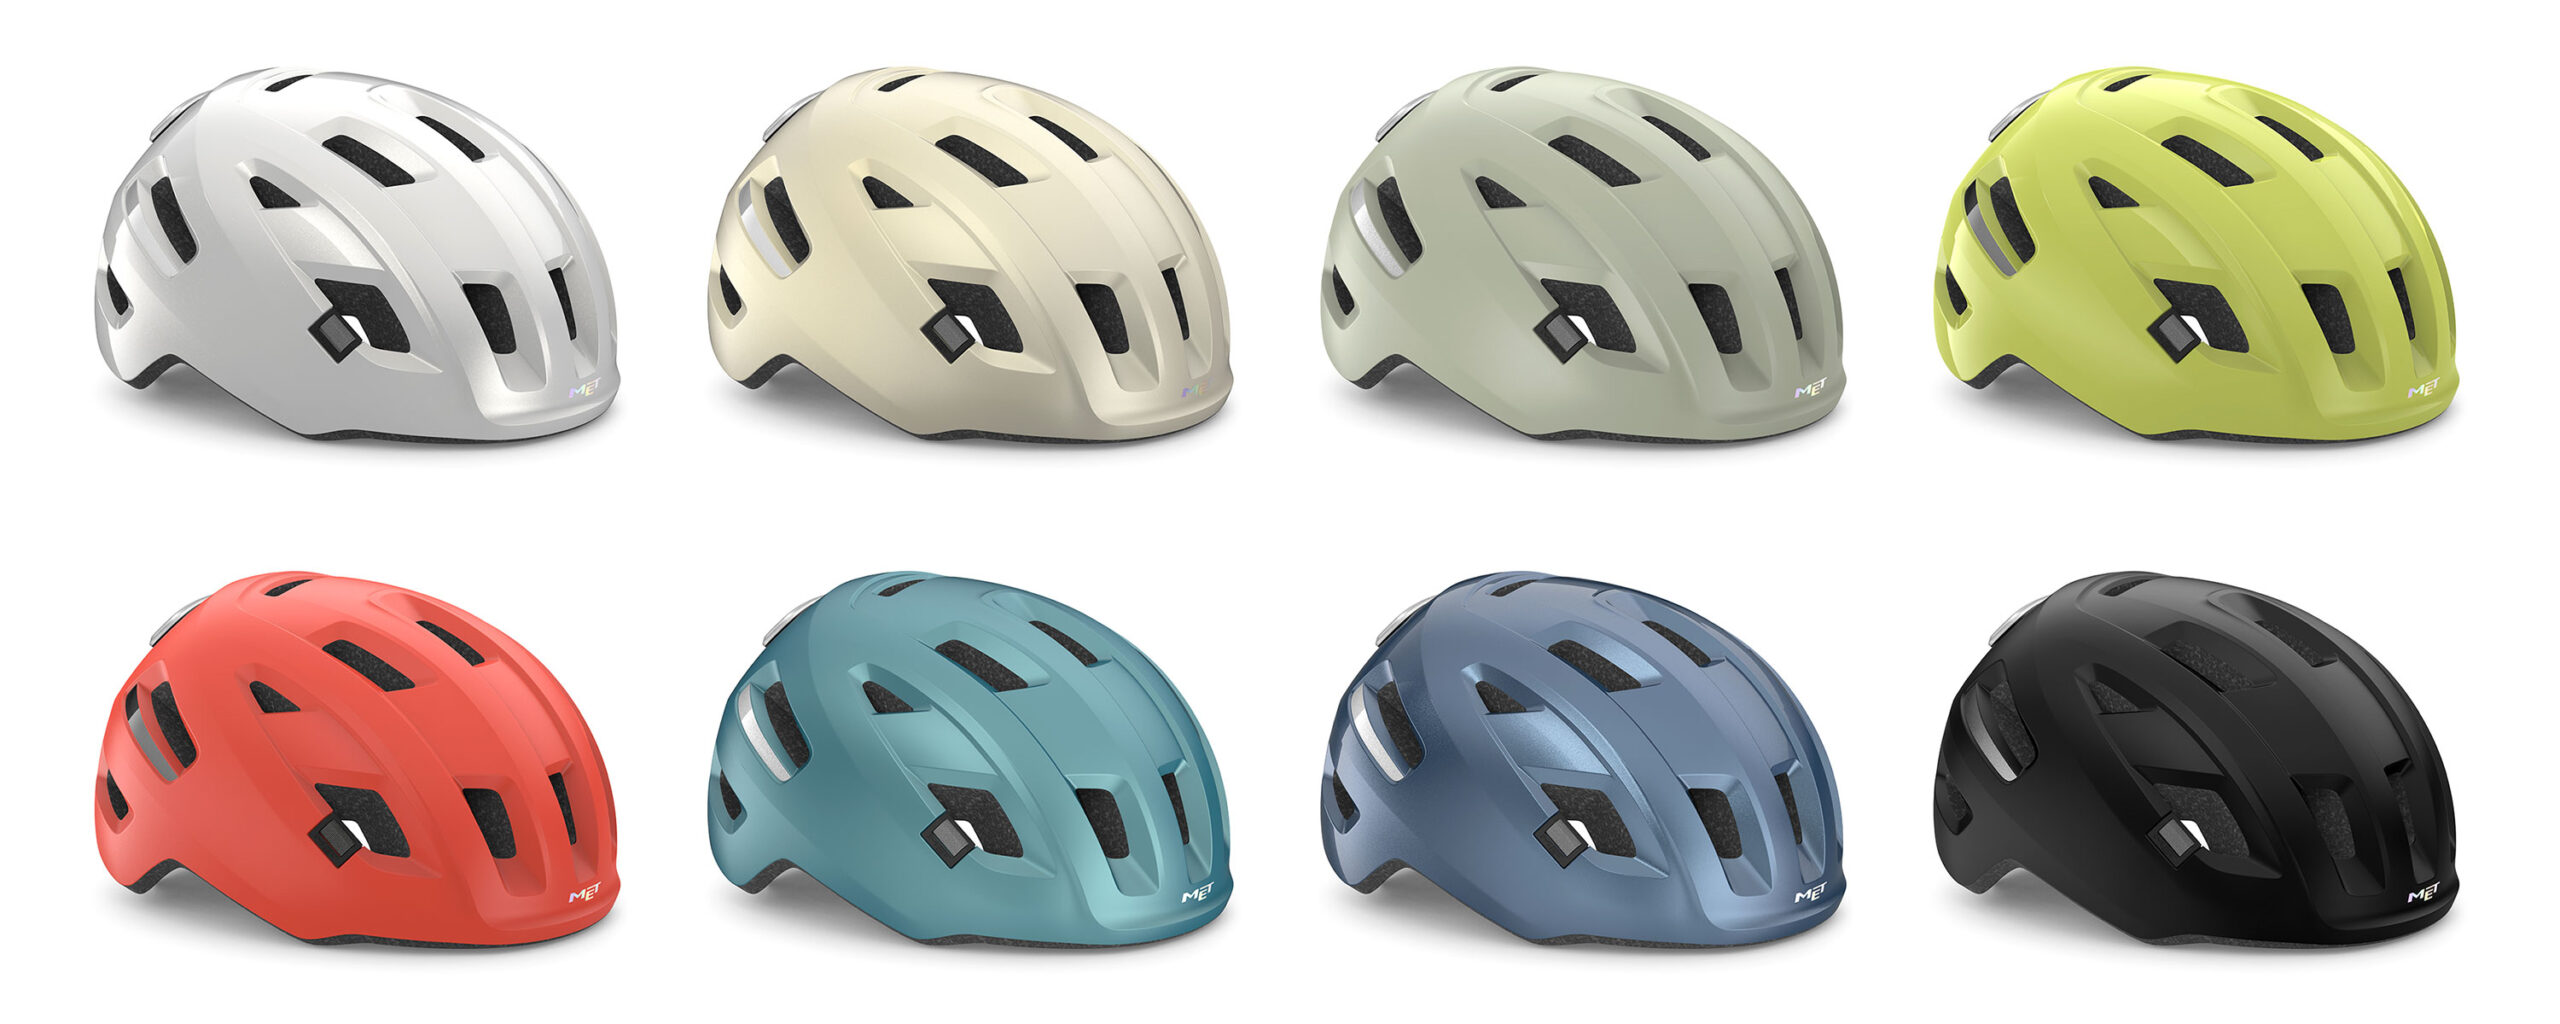 MET E-Mob MIPS urban ebike commuter helmet, pedelec NTA 8776-certified, color options